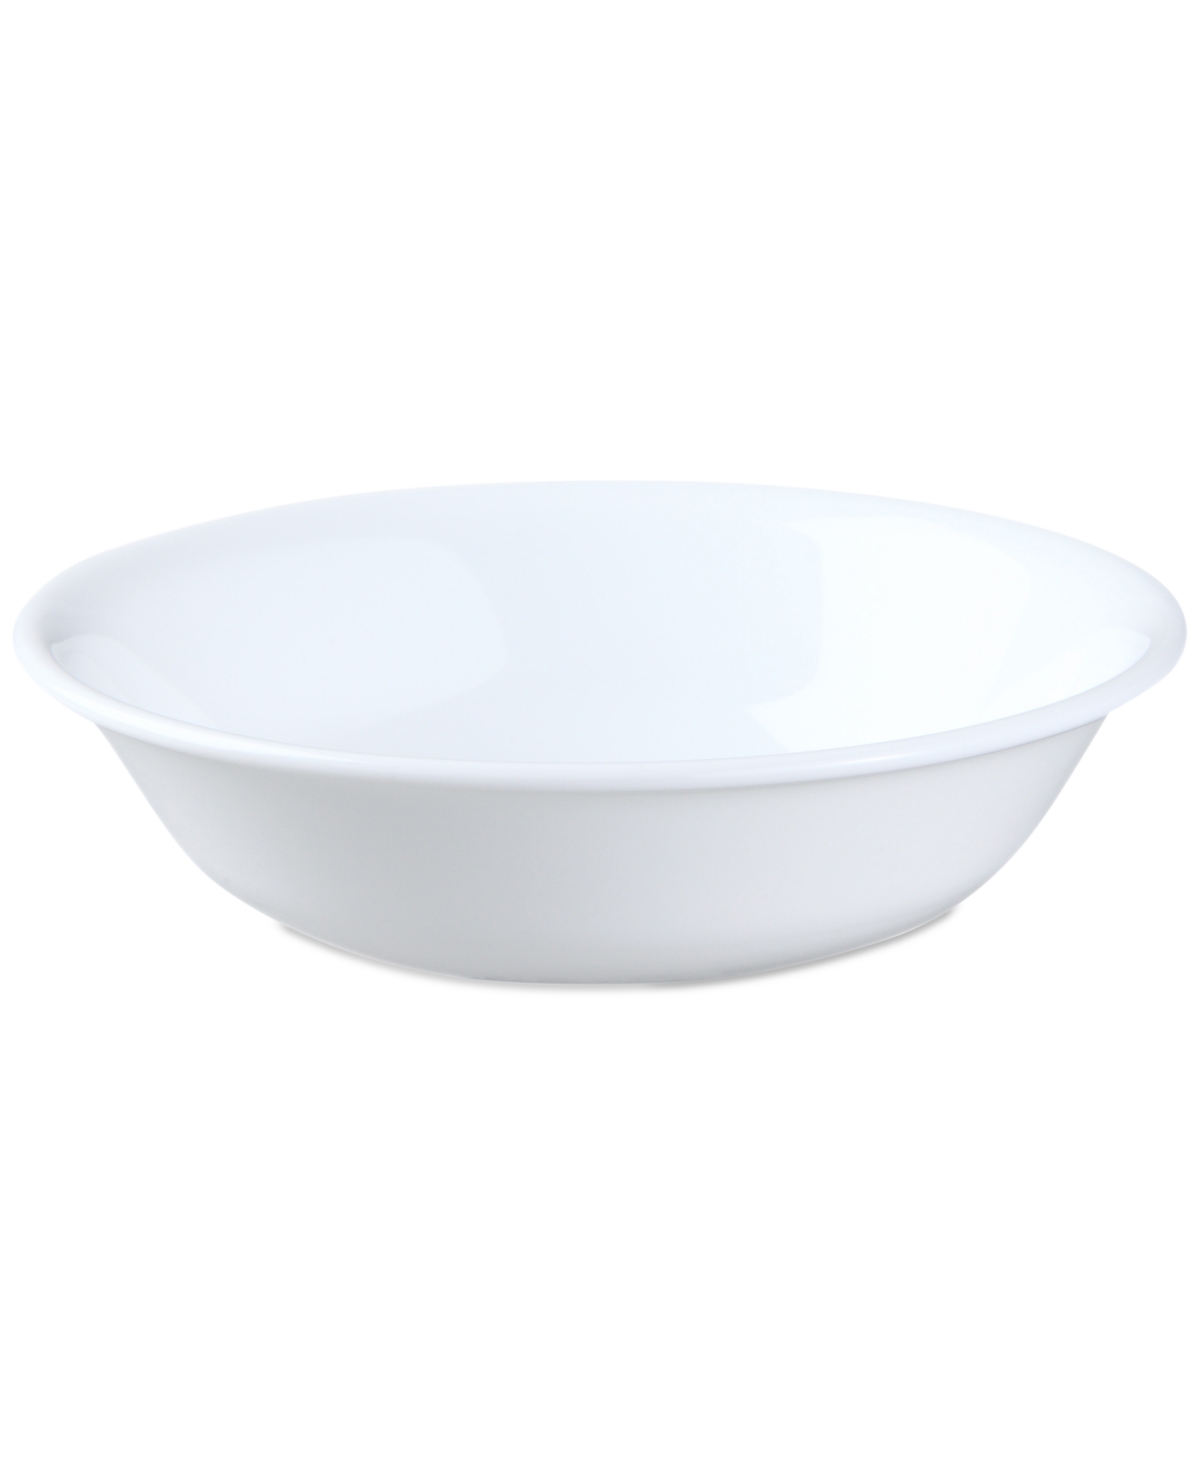 Round Frost White Dessert Bowl - White